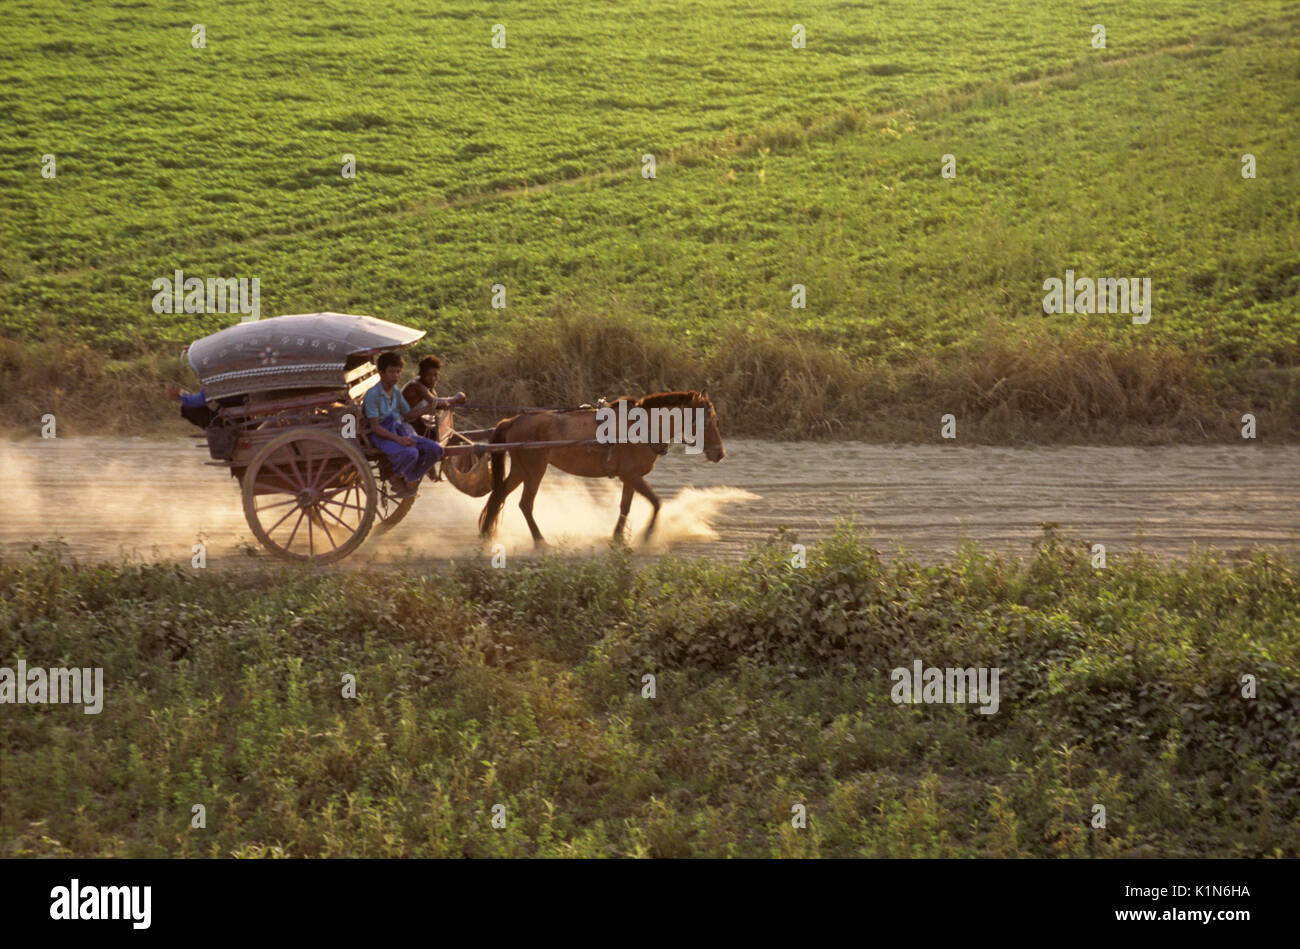 Pony cart on dusty road amid agricultural fields, Amarapura, Mandalay, Burma (Myanmar) Stock Photo